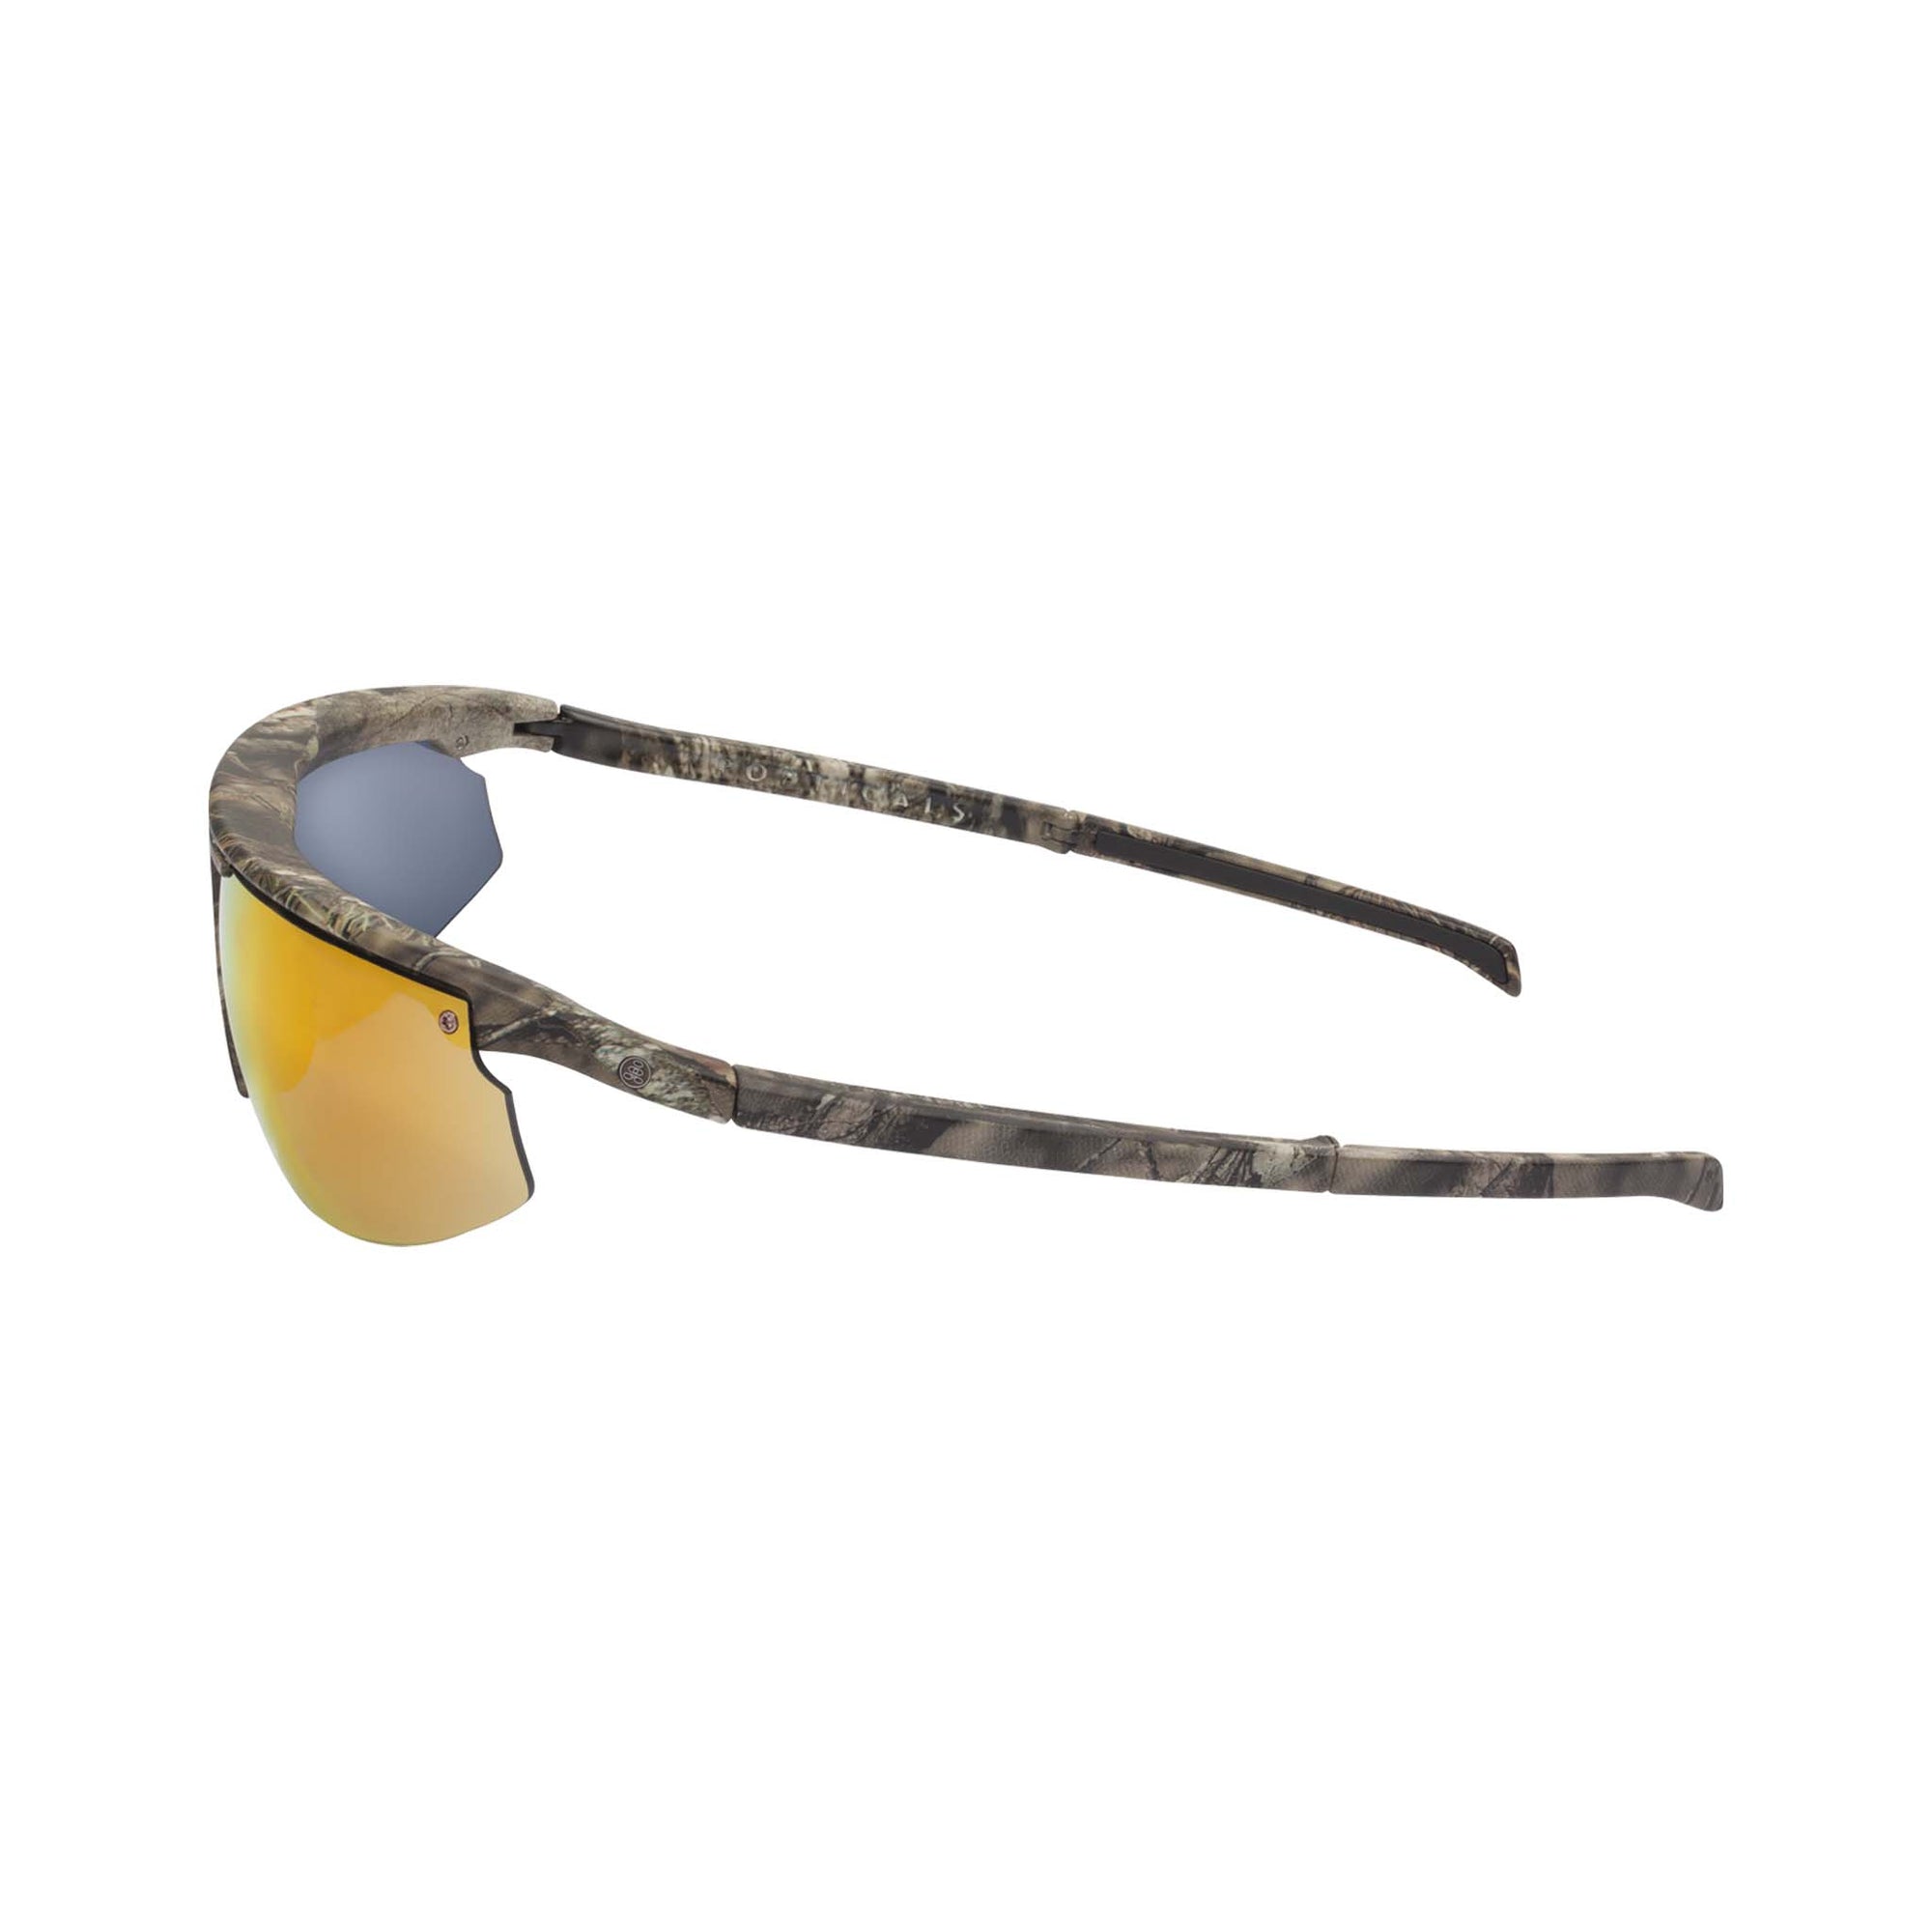 Popticals, Premium Compact Sunglasses, PopStar, 010040-MCON, Polarized Sunglasses, Matte Mossy Oak Break-Up Frame, Gray Lenses w/Orange Mirror Finish, Side View